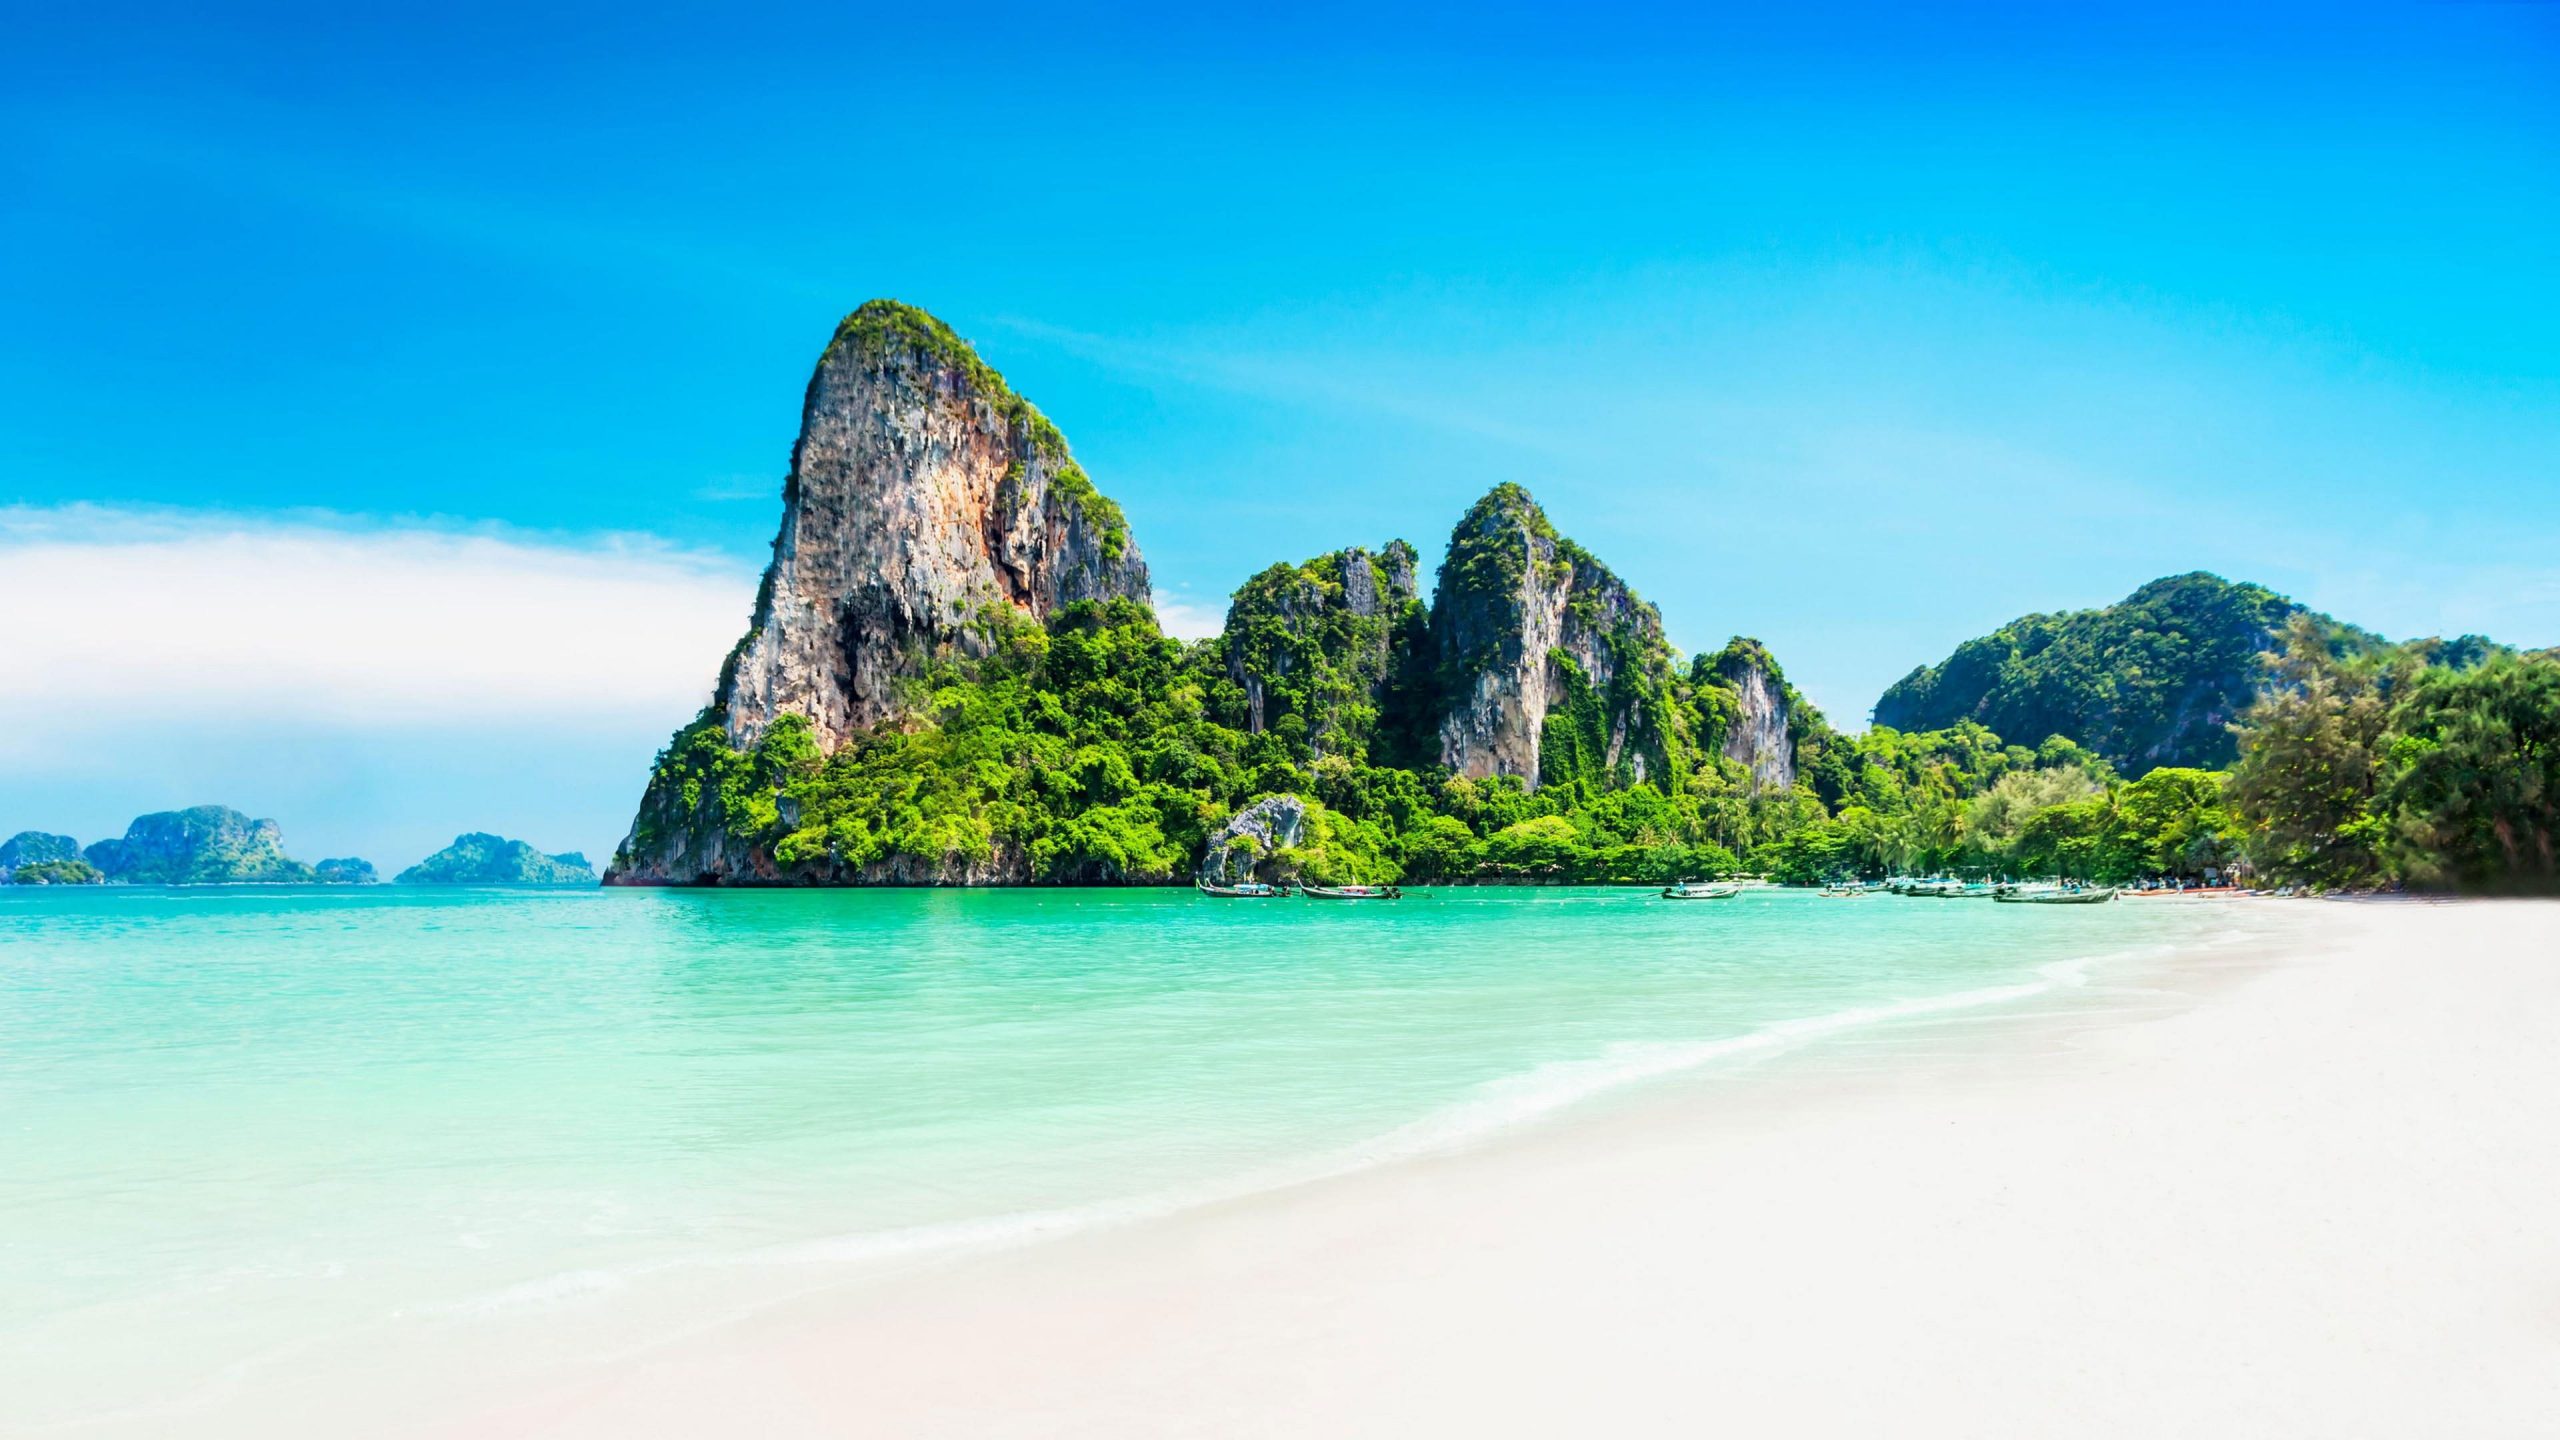 krabi wallpaper, thailand, tropical, beach, white sand, sandy, blue sky